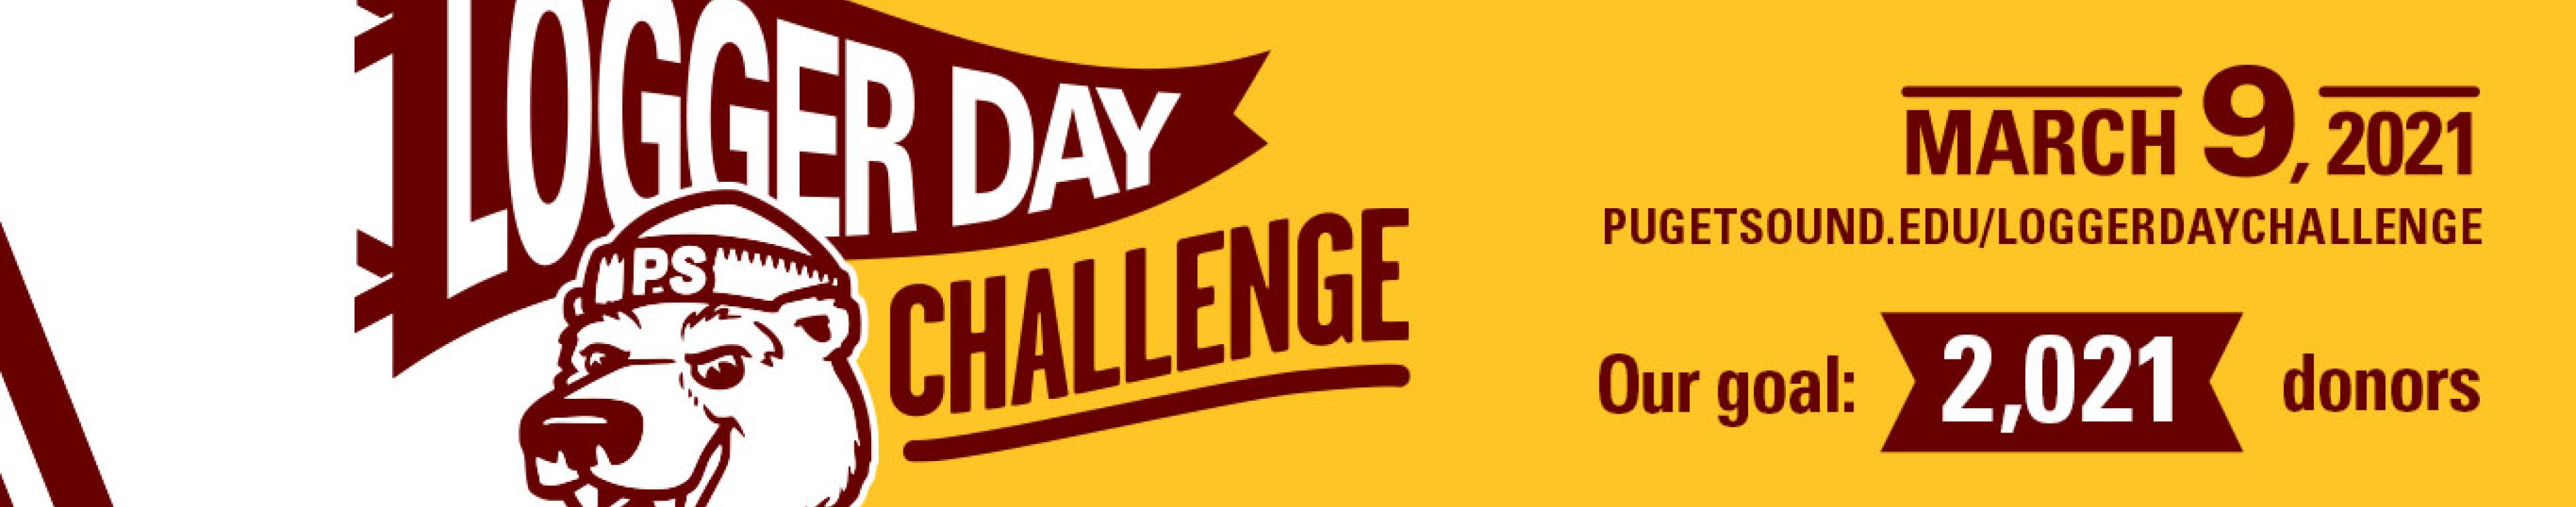 Logger Day Challenge 2021